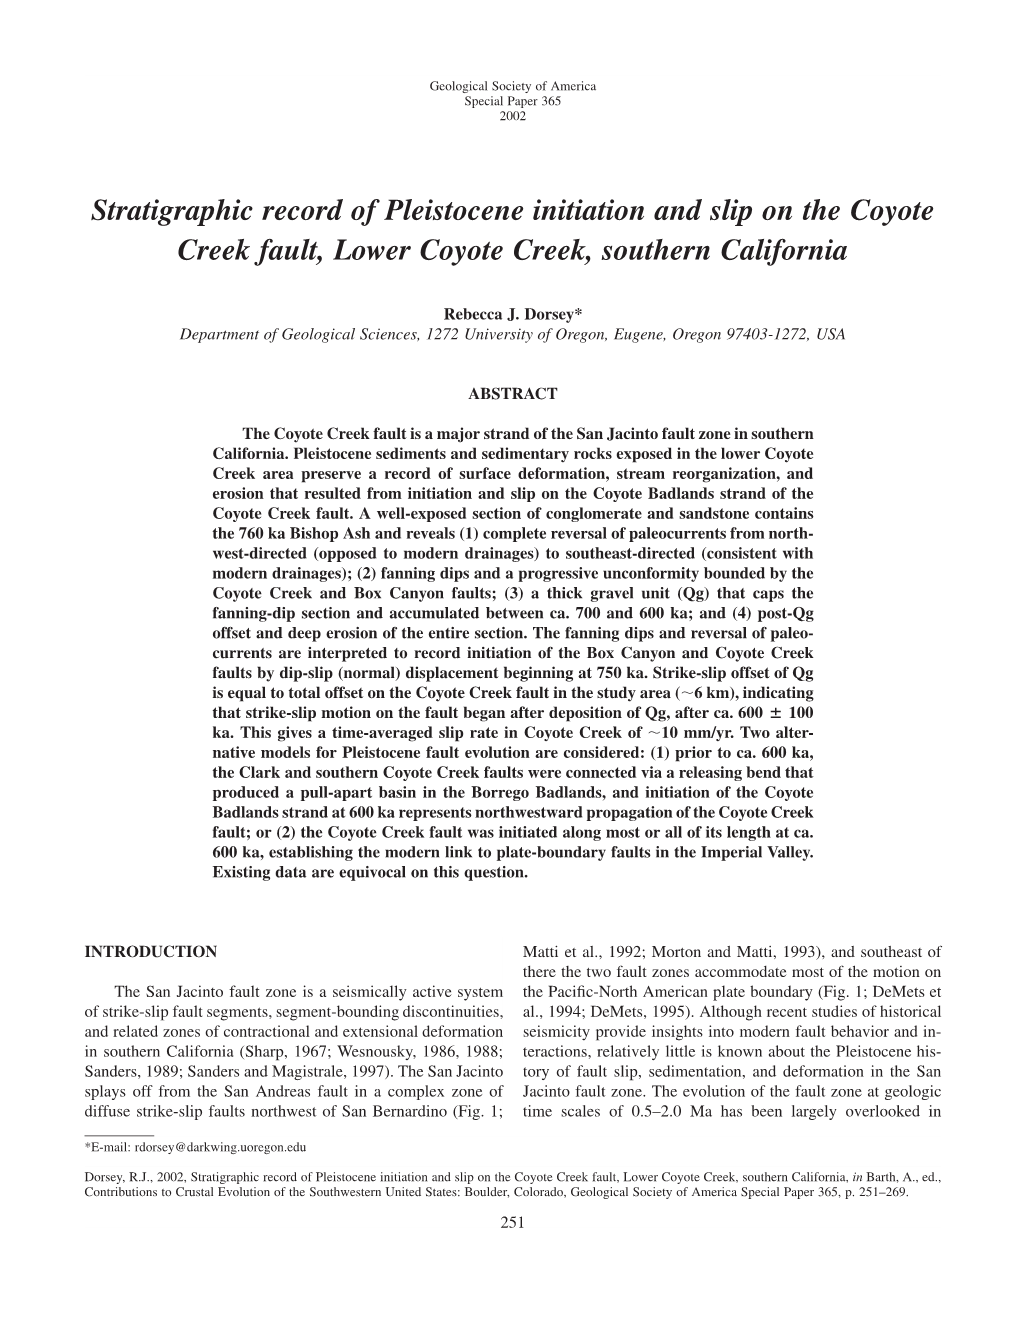 Stratigraphic Record of Pleistocene Initiation and Slip, Coyote Creek Fault